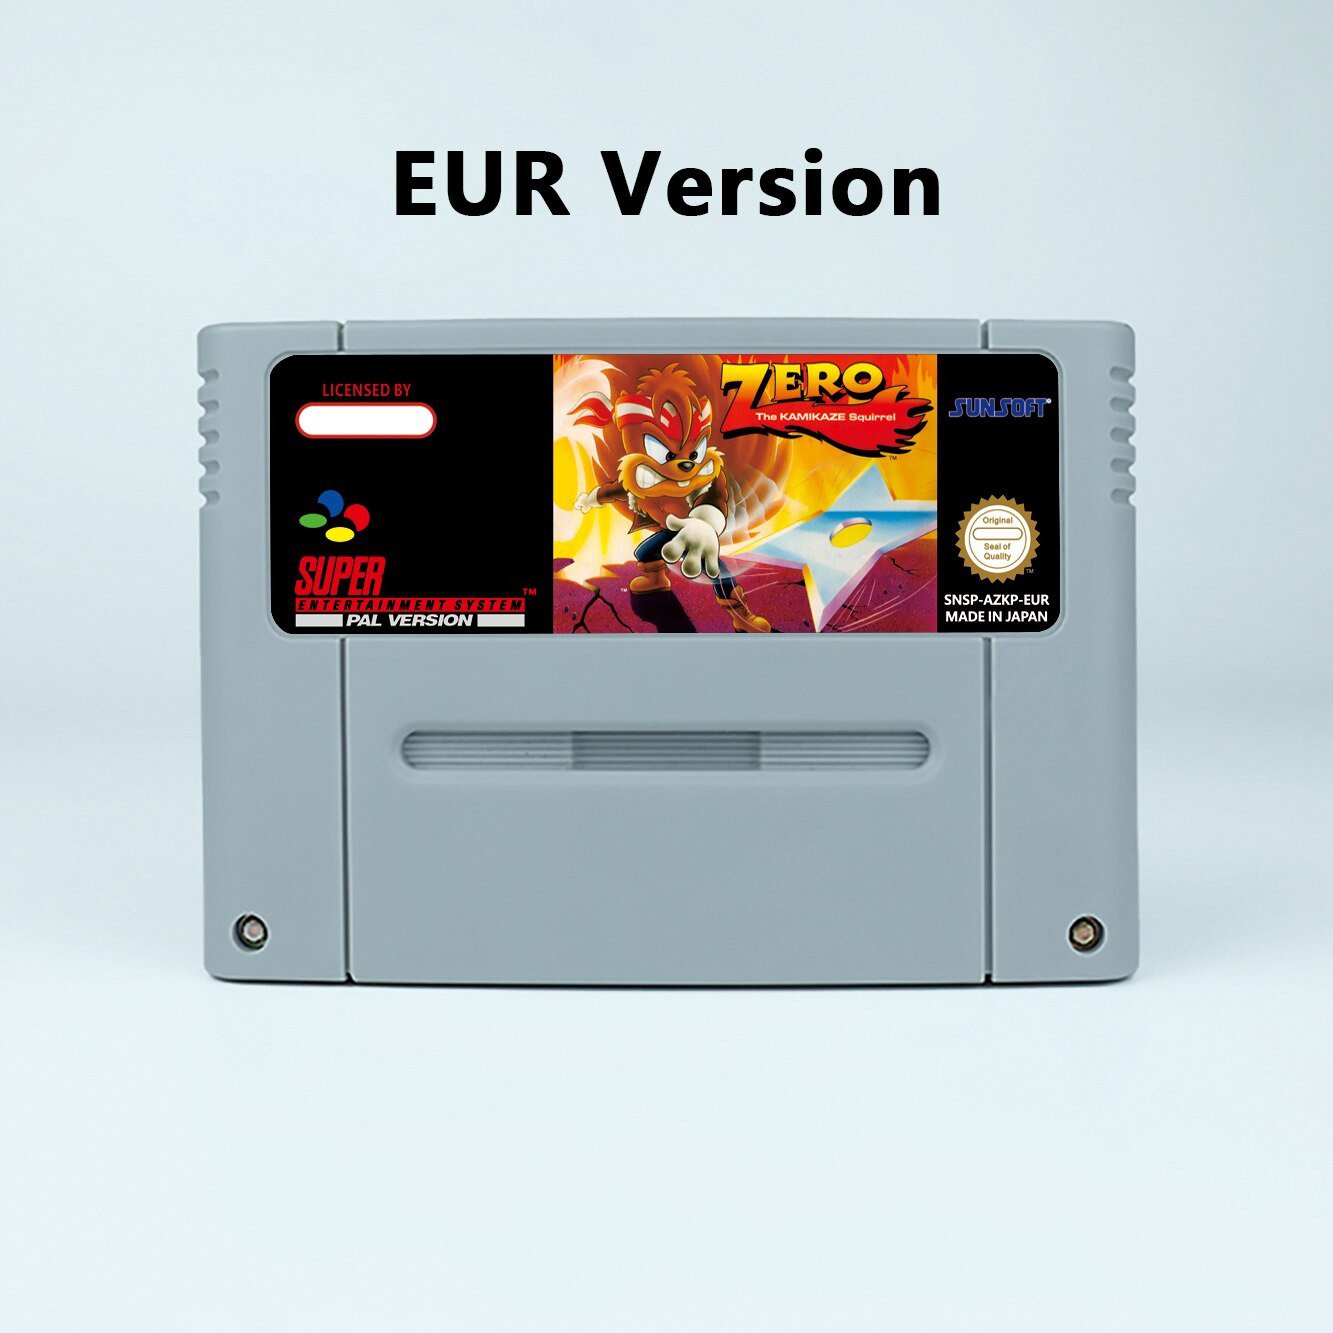 Zero the Kamikaze Squirrel Action Game EUR Version Cartridge for SNES Game Consoles